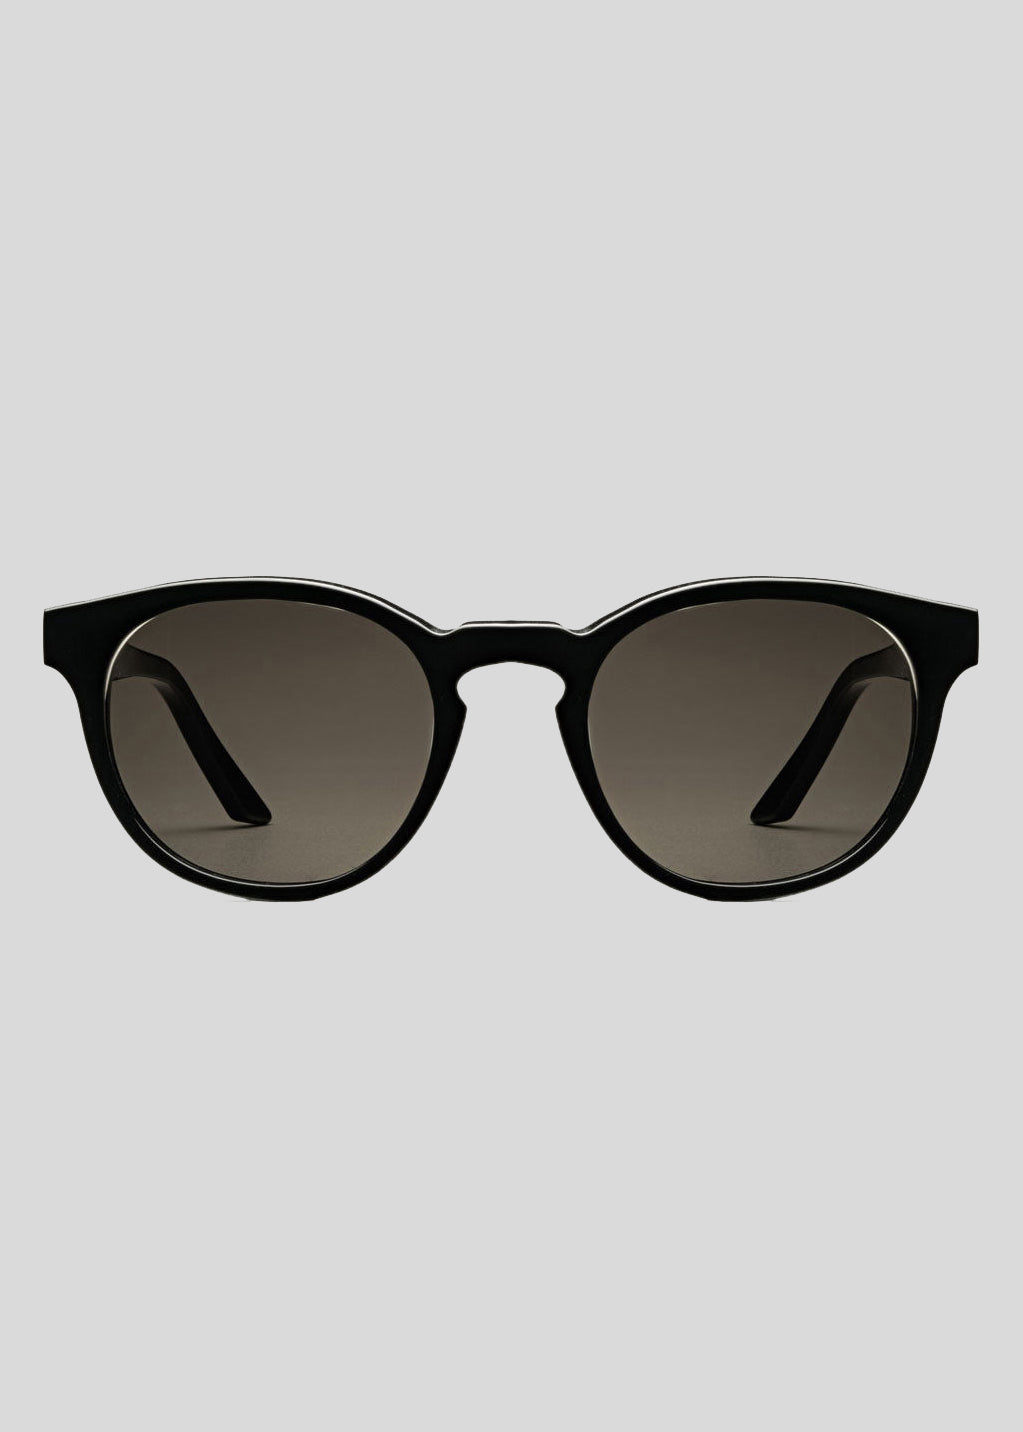 Marlton black Sunglasses front